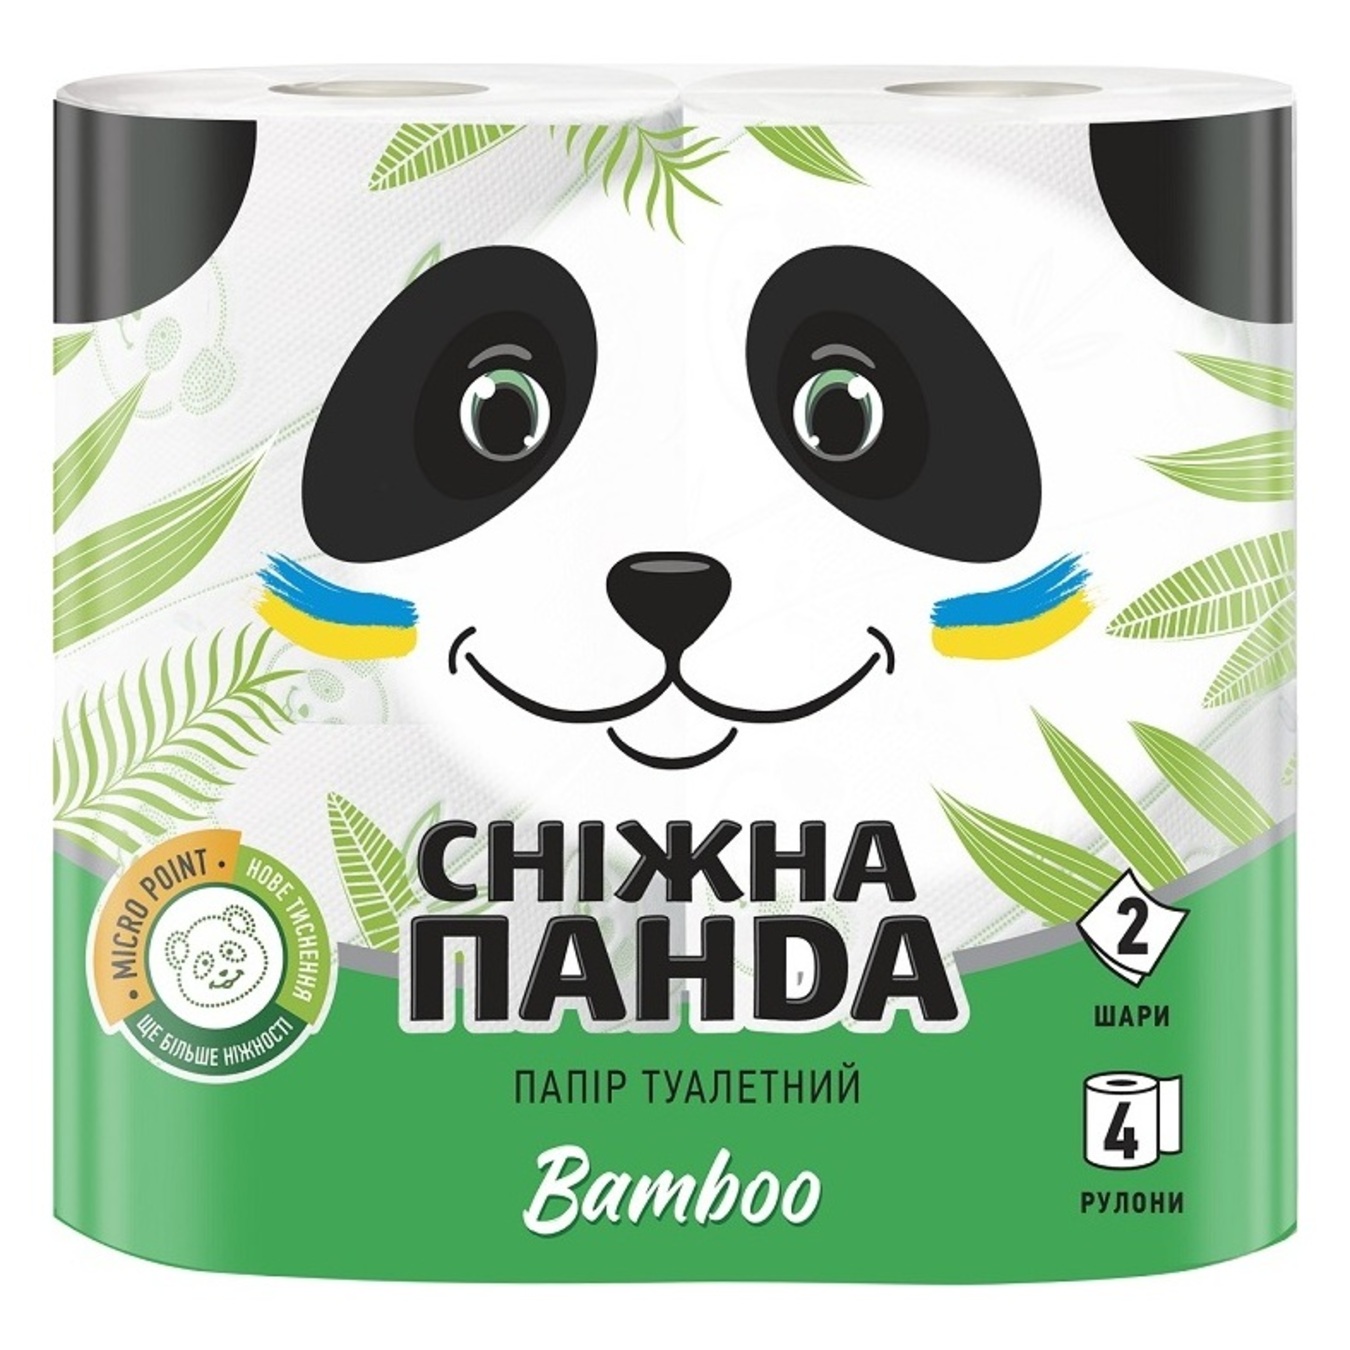 Snow Panda Bamboo Toilet Paper 4pcs